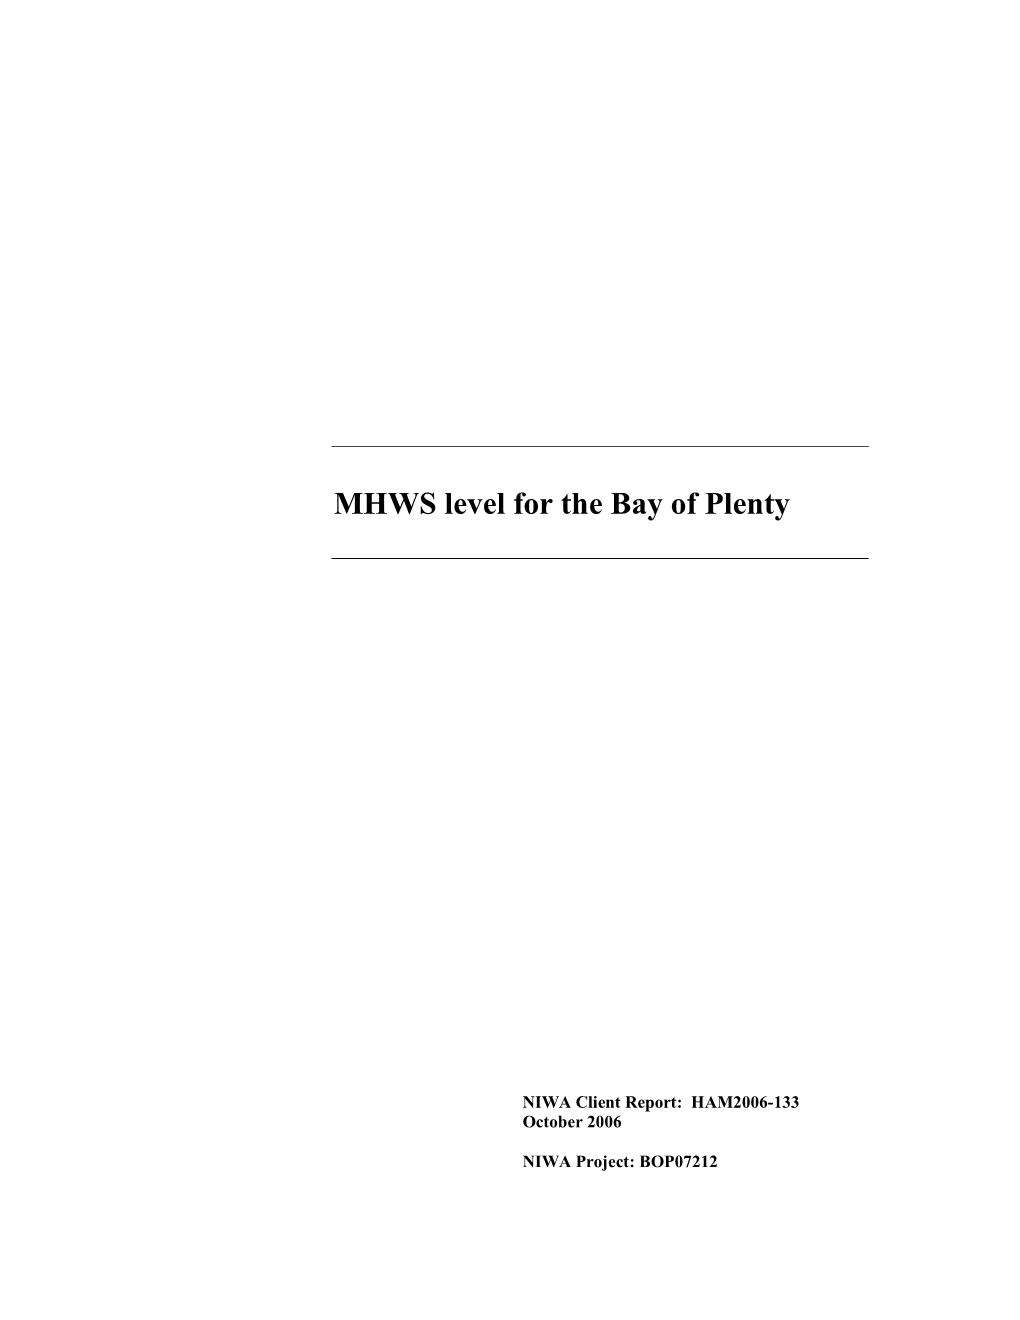 MHWS Level for the Bay of Plenty